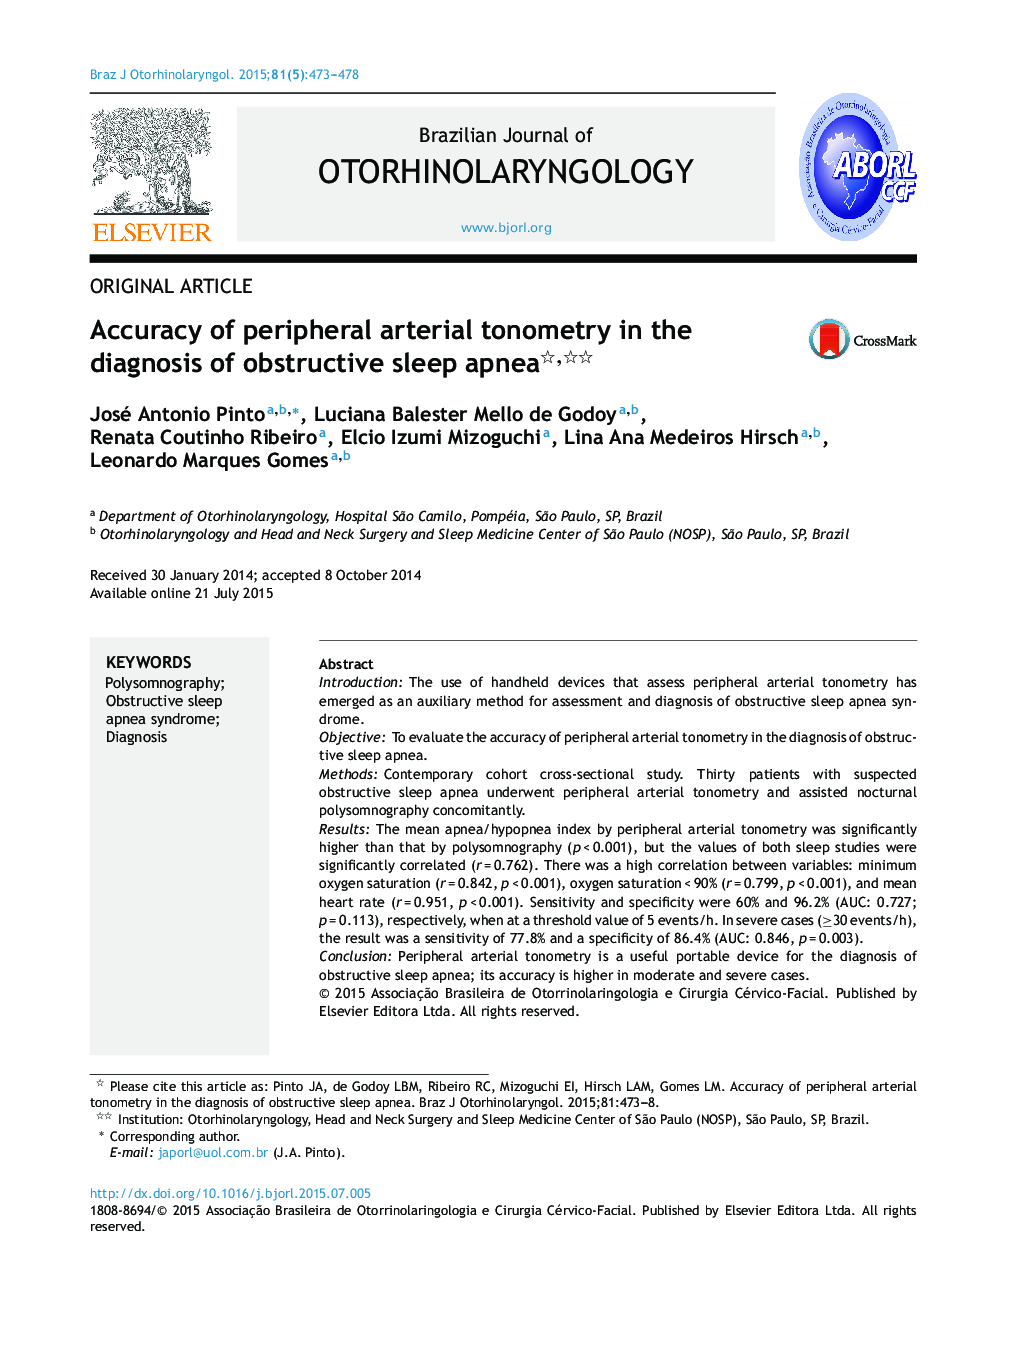 Accuracy of peripheral arterial tonometry in the diagnosis of obstructive sleep apnea 